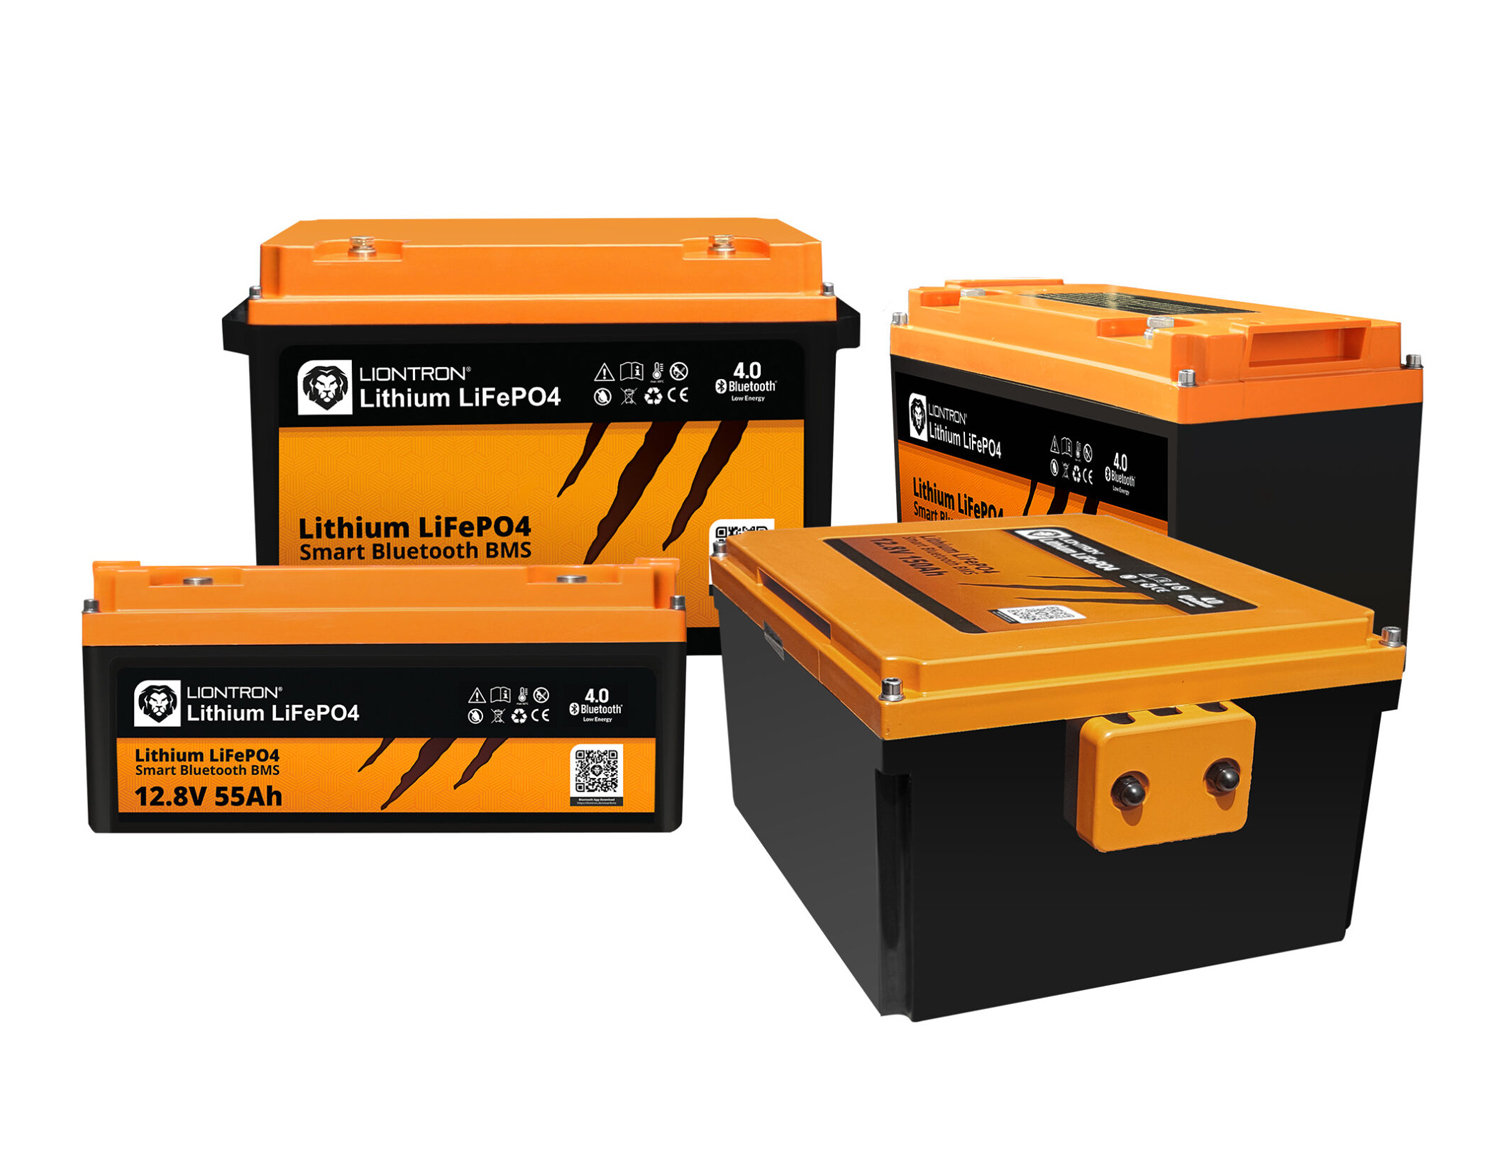 Batterie lifepo4 Liontron - Batterie lithium fer phosphate (LiFePO4) -  BatterySet